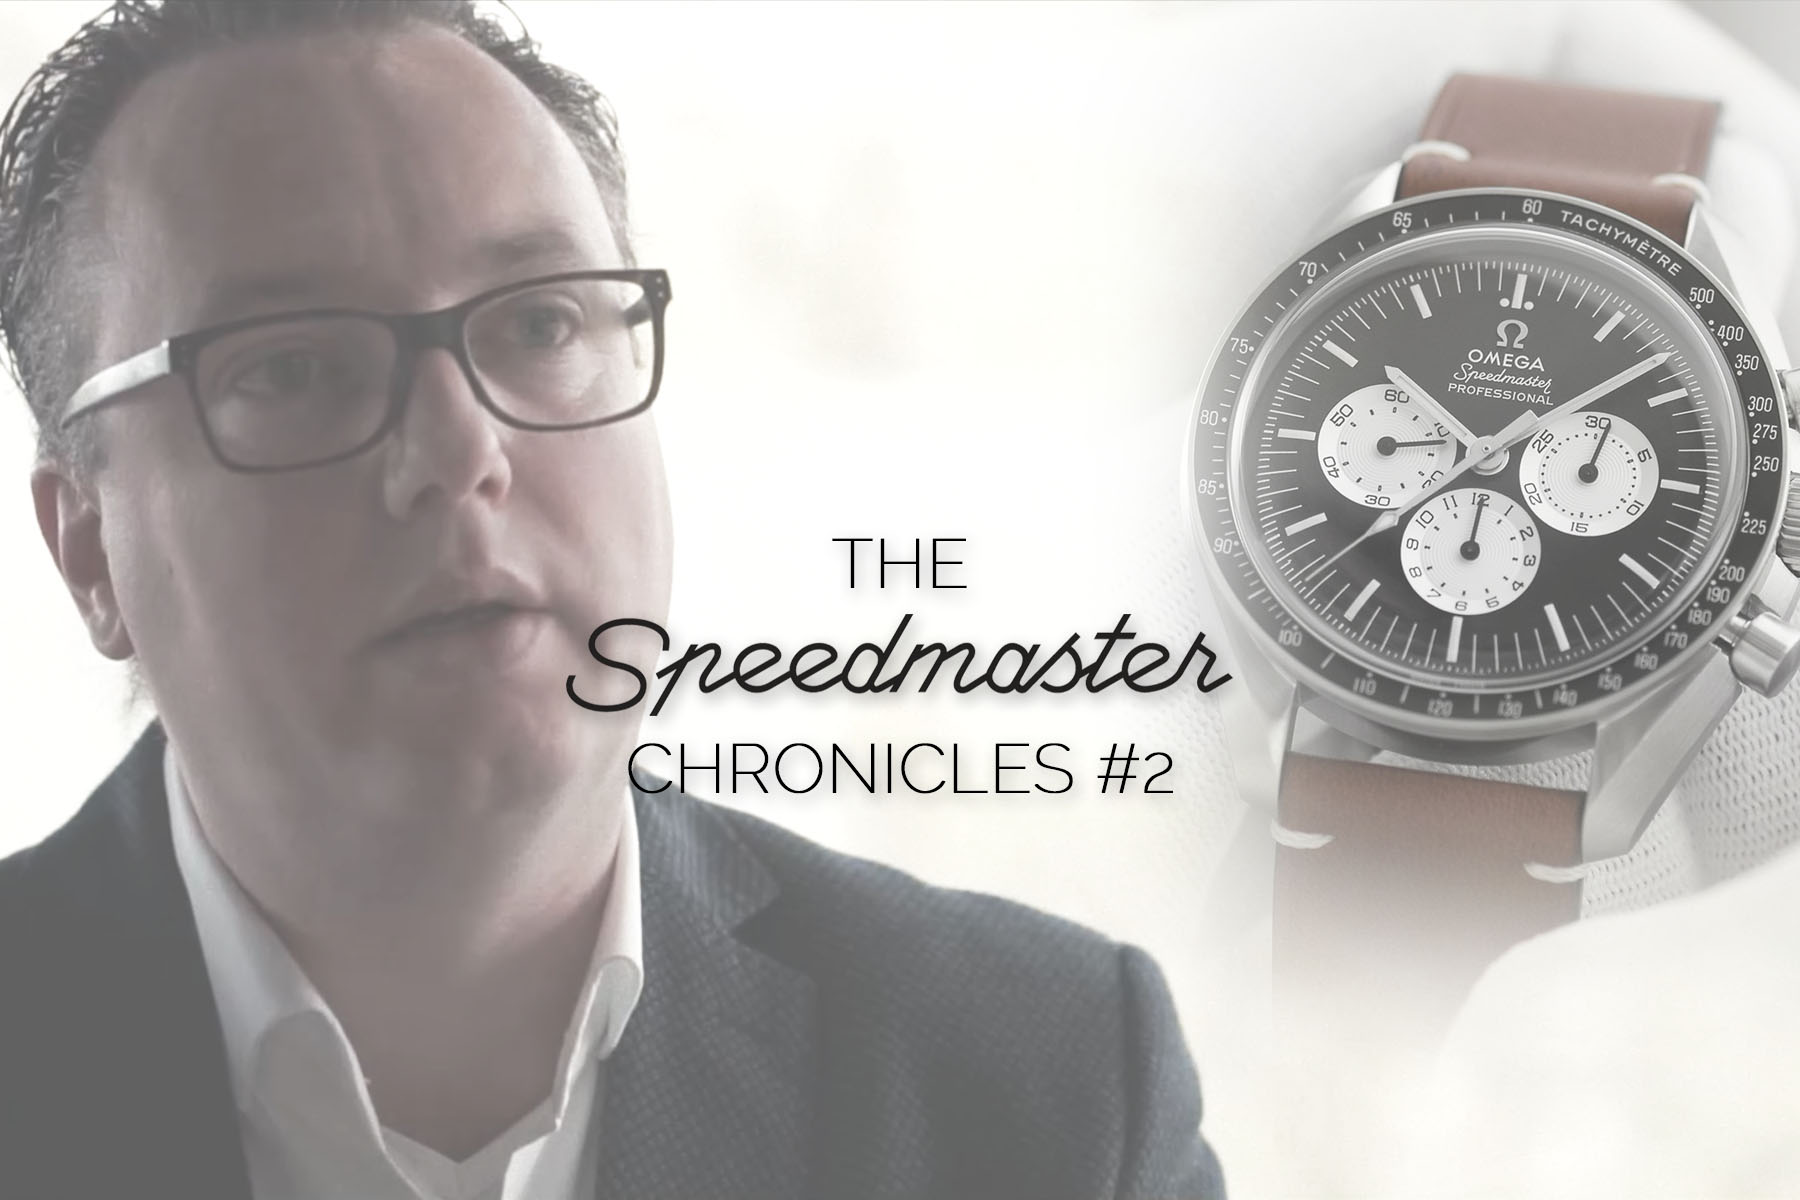 The Speedmaster Chronicles Ep 2 - Robert-Jan Broer Speedy Tuesday